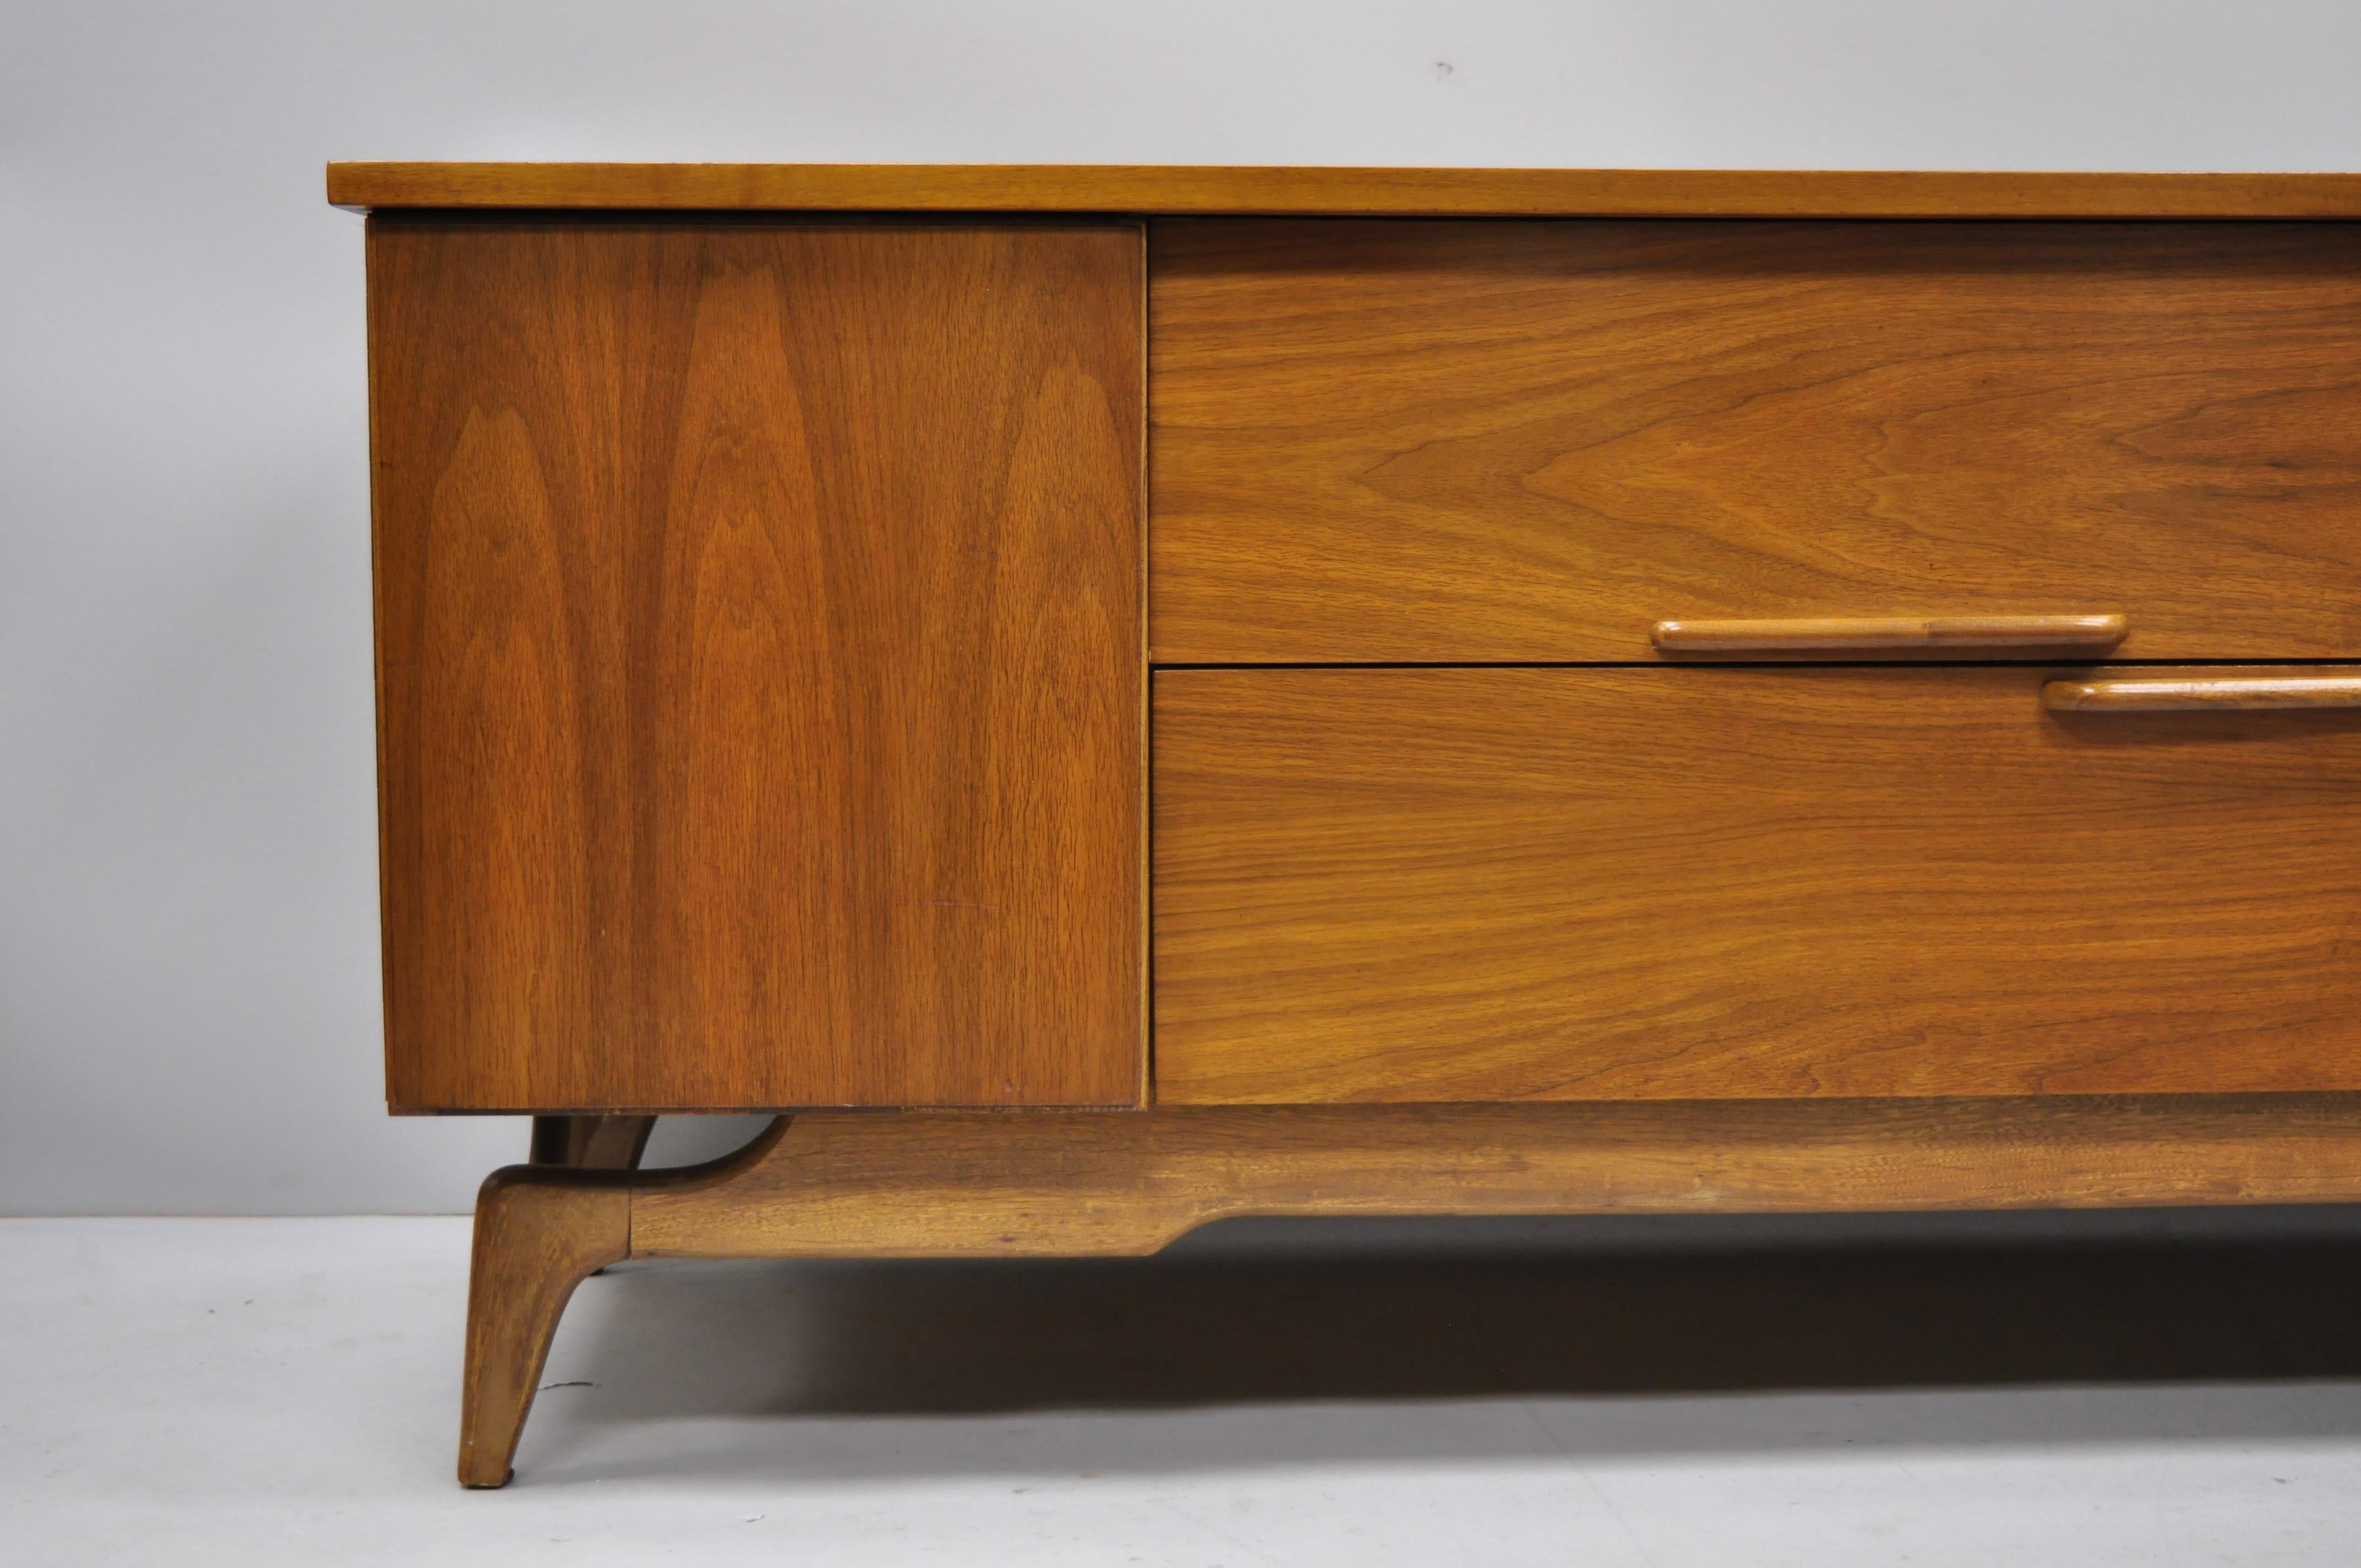 Vintage Mid-Century Modern low sleek walnut credenza cabinet TV console. Item features beautiful wood grain, 2 swing doors, 4 dovetailed drawers, 1 wooden shelf, sleek sculptural, circa 1960s. Measurements: 25